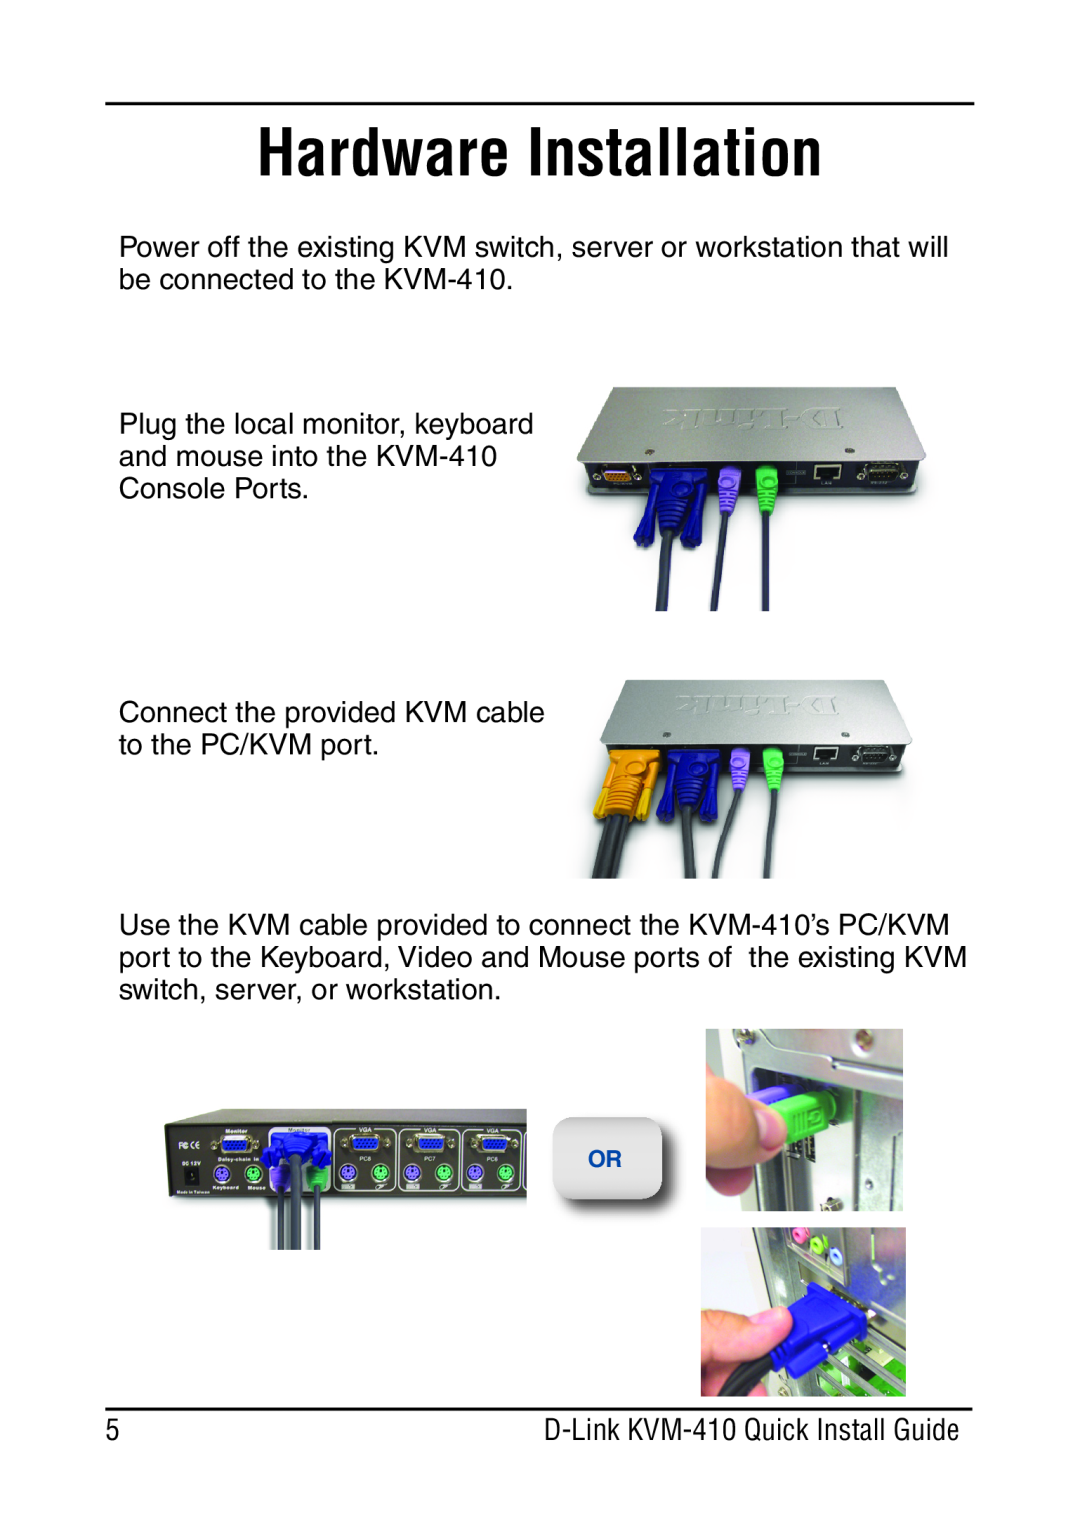 D-Link KVM-410 manual Hardware Installation 